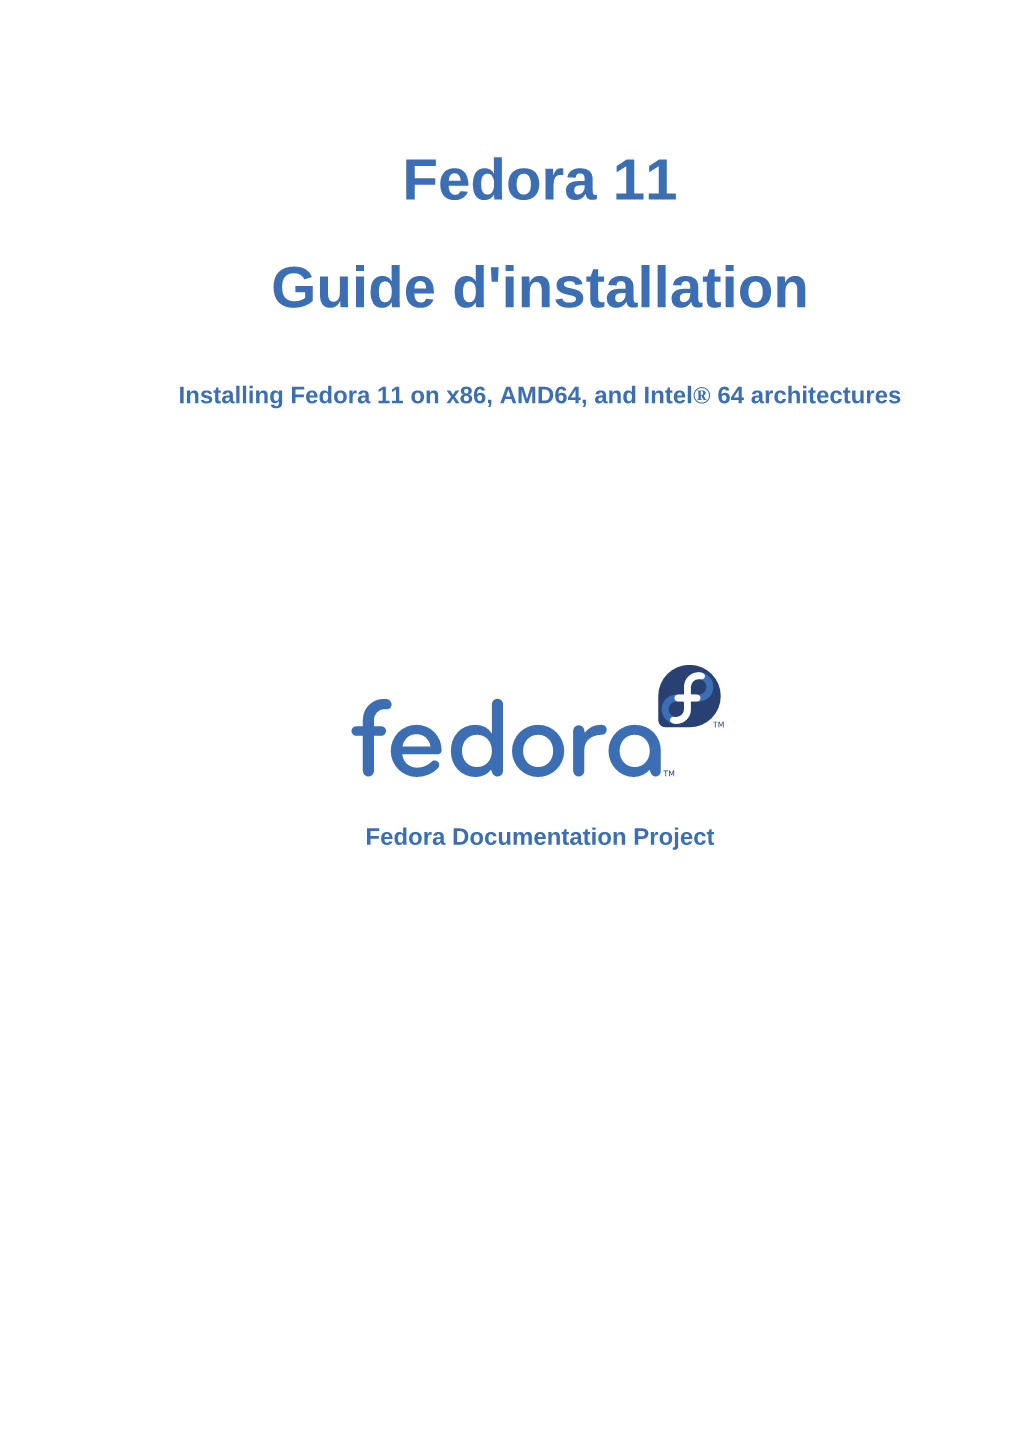 Fedora 11 Guide D'installation